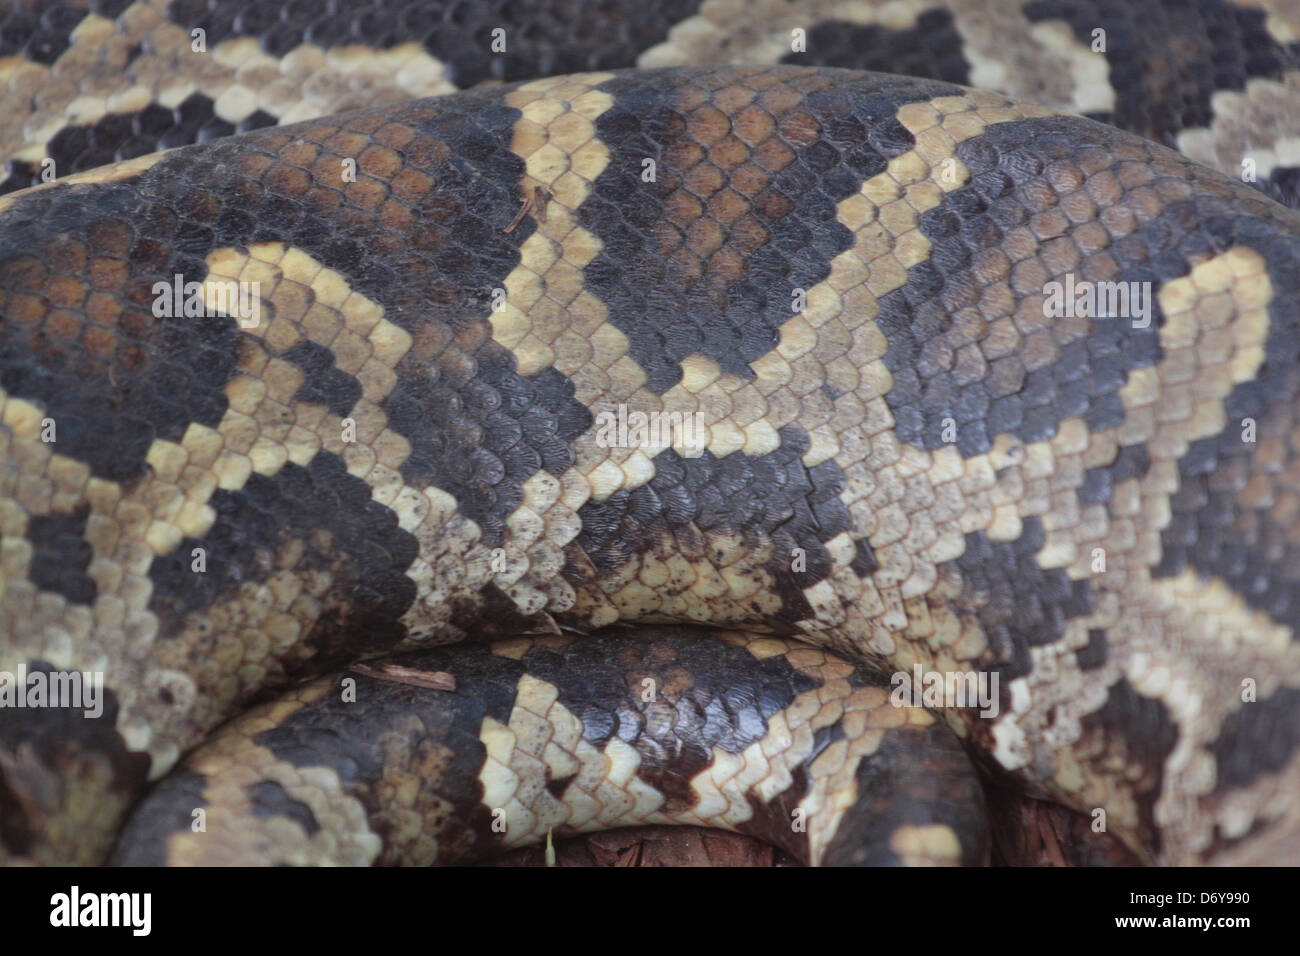 The Boa of Thailand,It a skin snake. Stock Photo